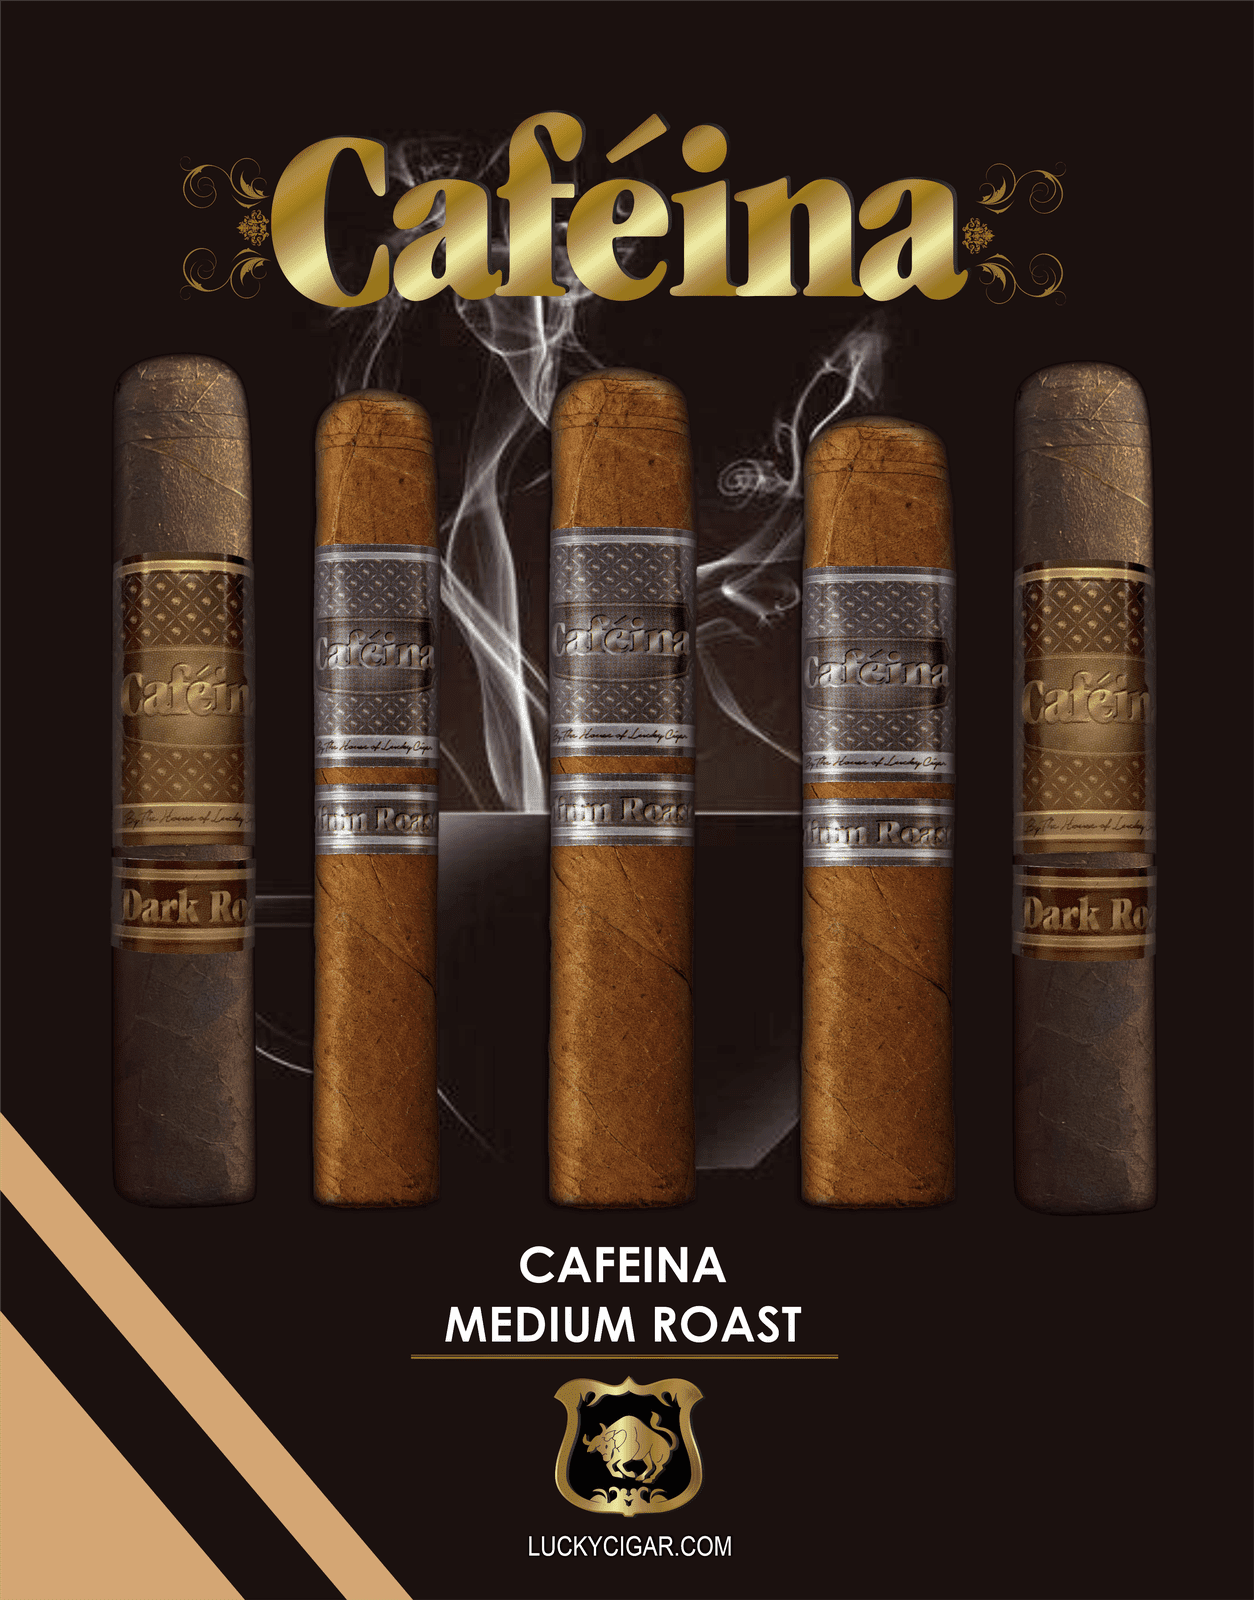 Infused Cigars: Set of 5 Cafeina Medium, Dark Roast Cigars - 3 Medium 5x58, 2 Dark 5x58 